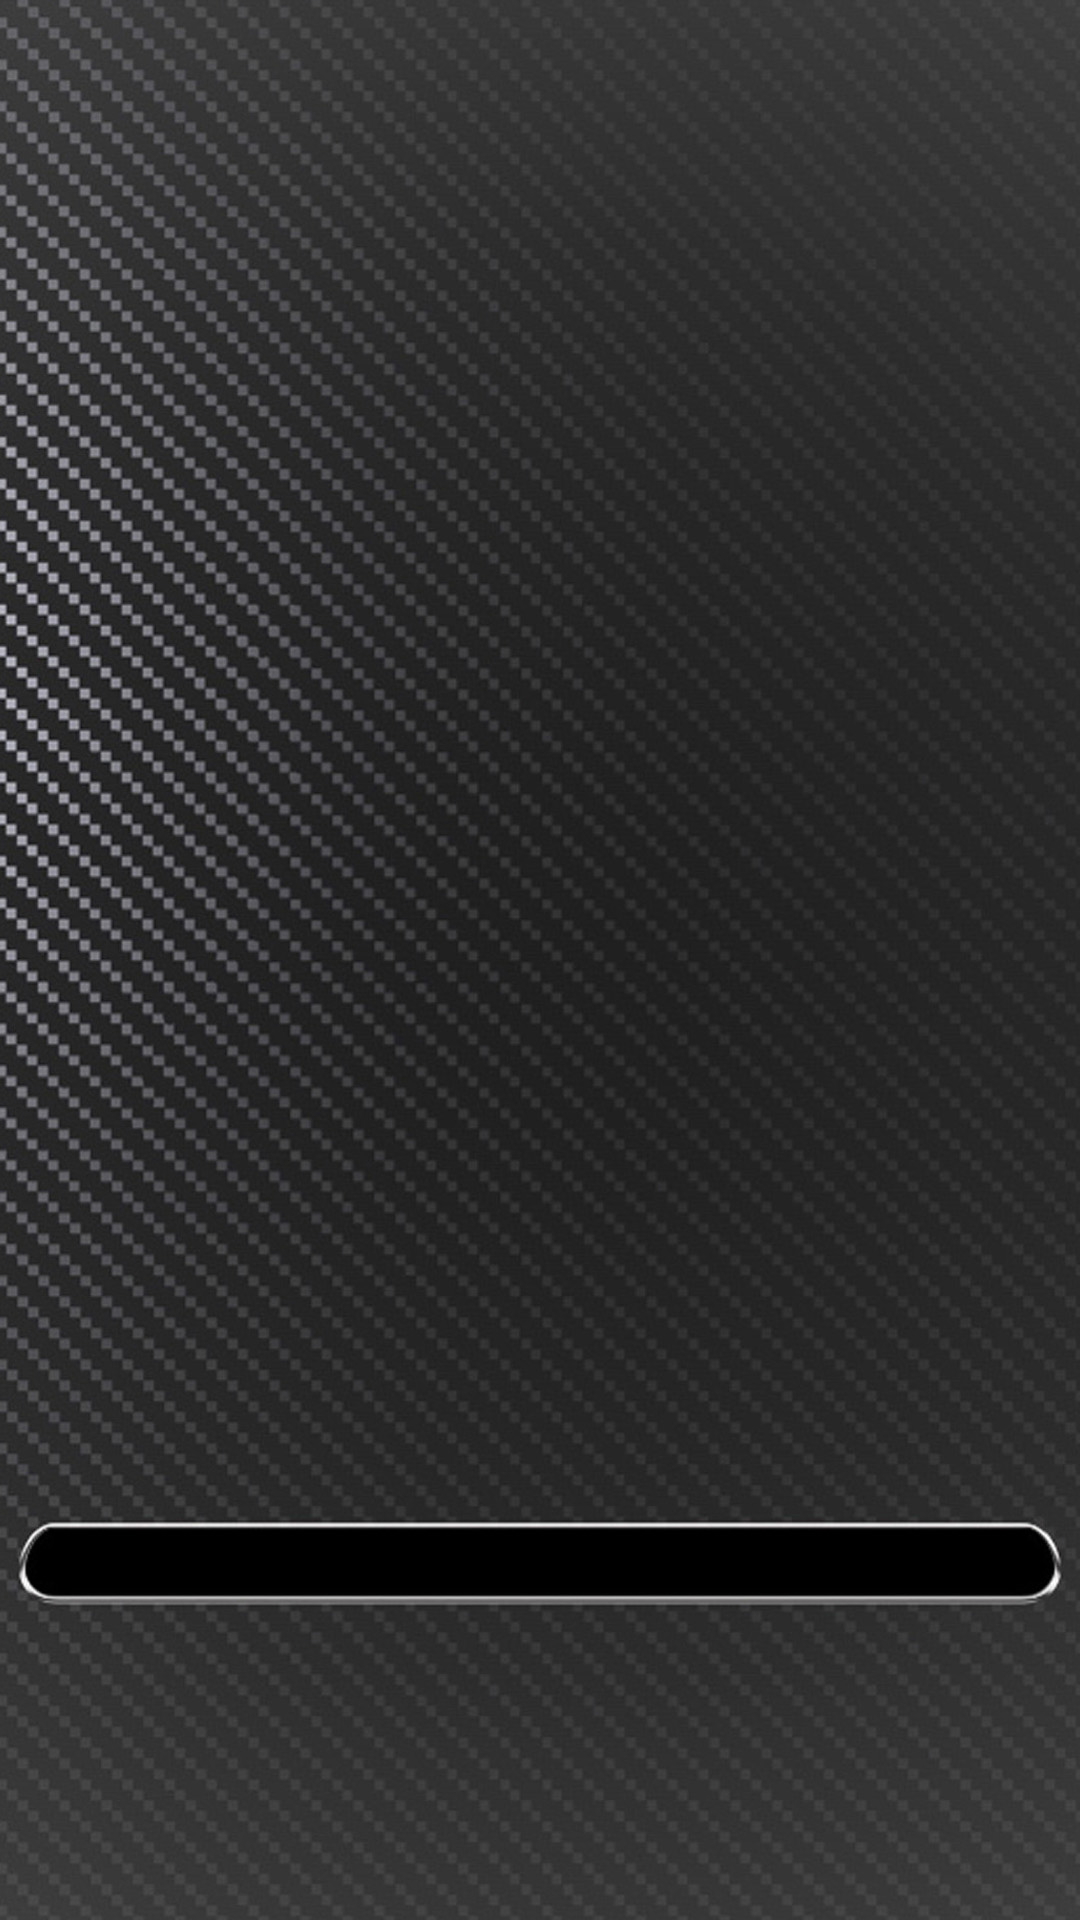 Carbon Fiber Samsung Wallpapers Samsung Galaxy S5 Galaxy S4 Galaxy Note 3 Wallpapers Iphone12 スマホ壁紙 待受画像ギャラリー